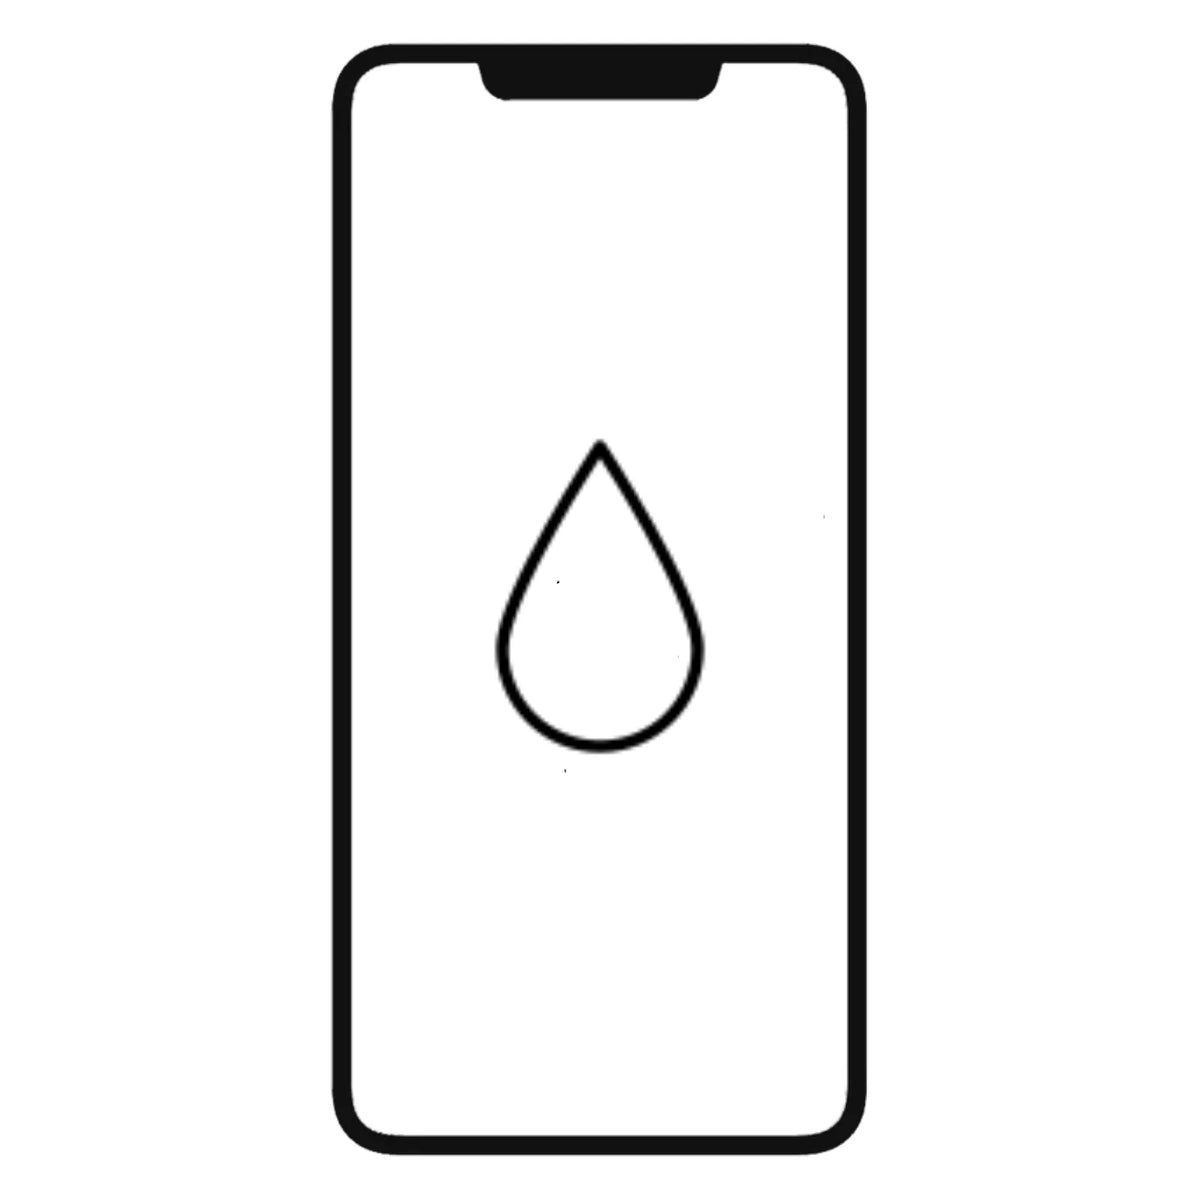 iPhone 12 Pro Max Water Damage Repair Service